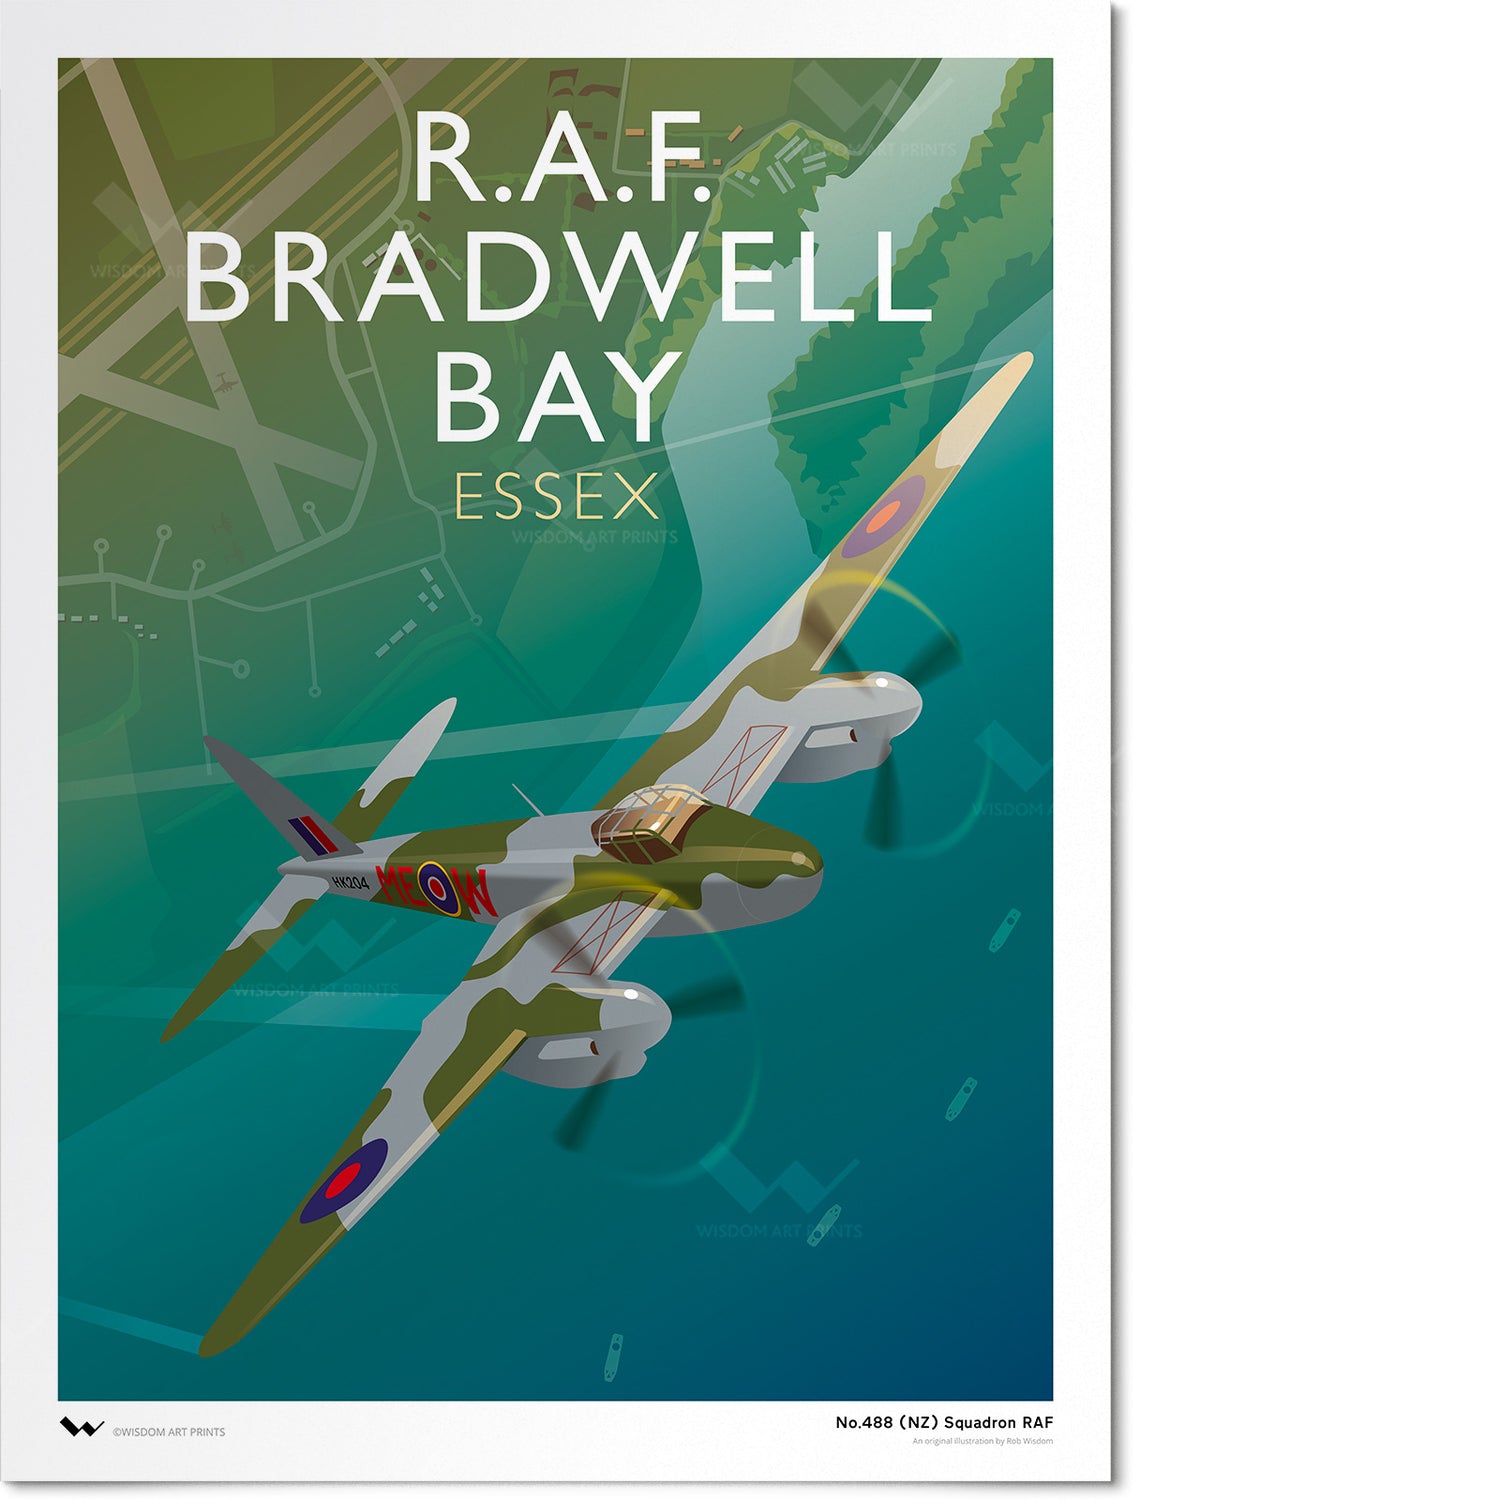 Illustration of RAF Bradwell Bay, featuring a De Havilland Mosquito